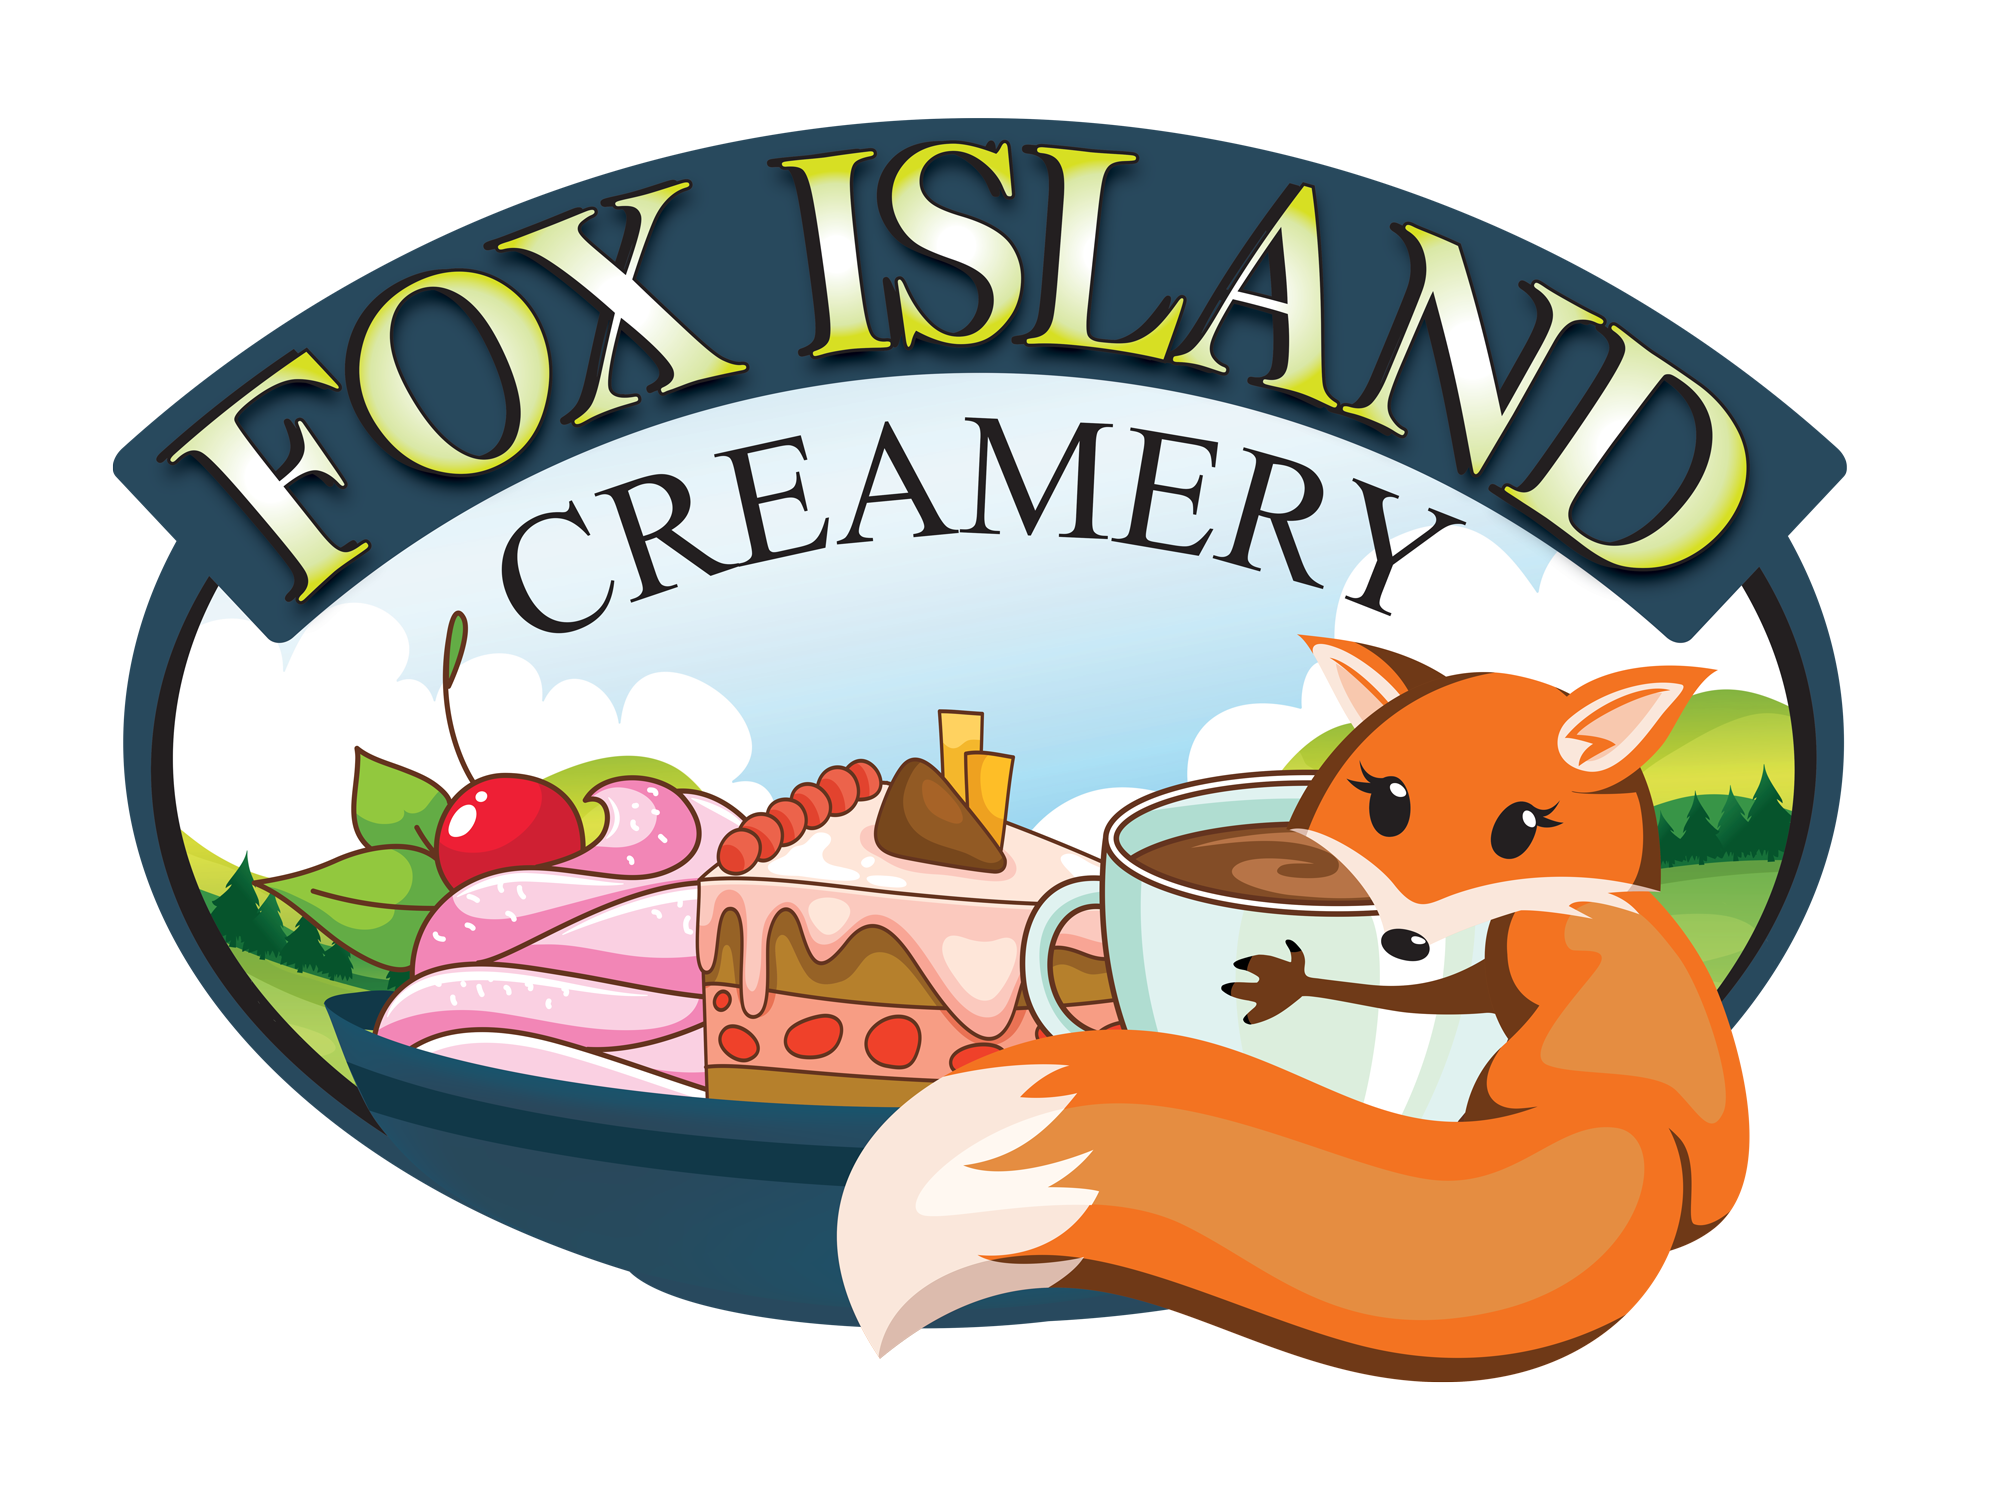 Fox Island Creamery